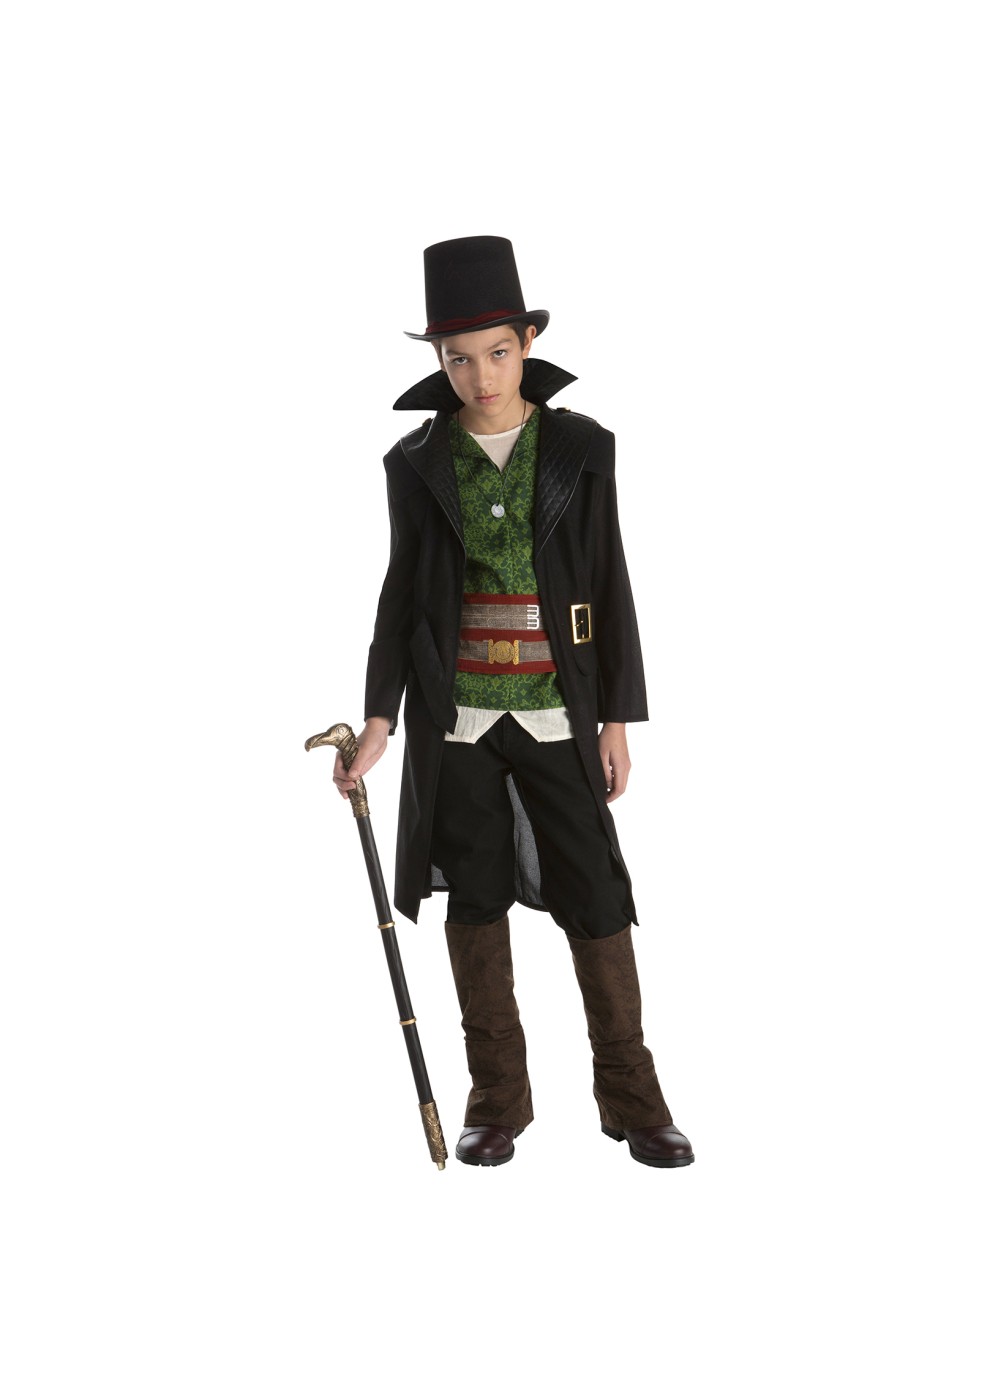 Jacob Frye Teen Boys Costume - Video Game Costumes